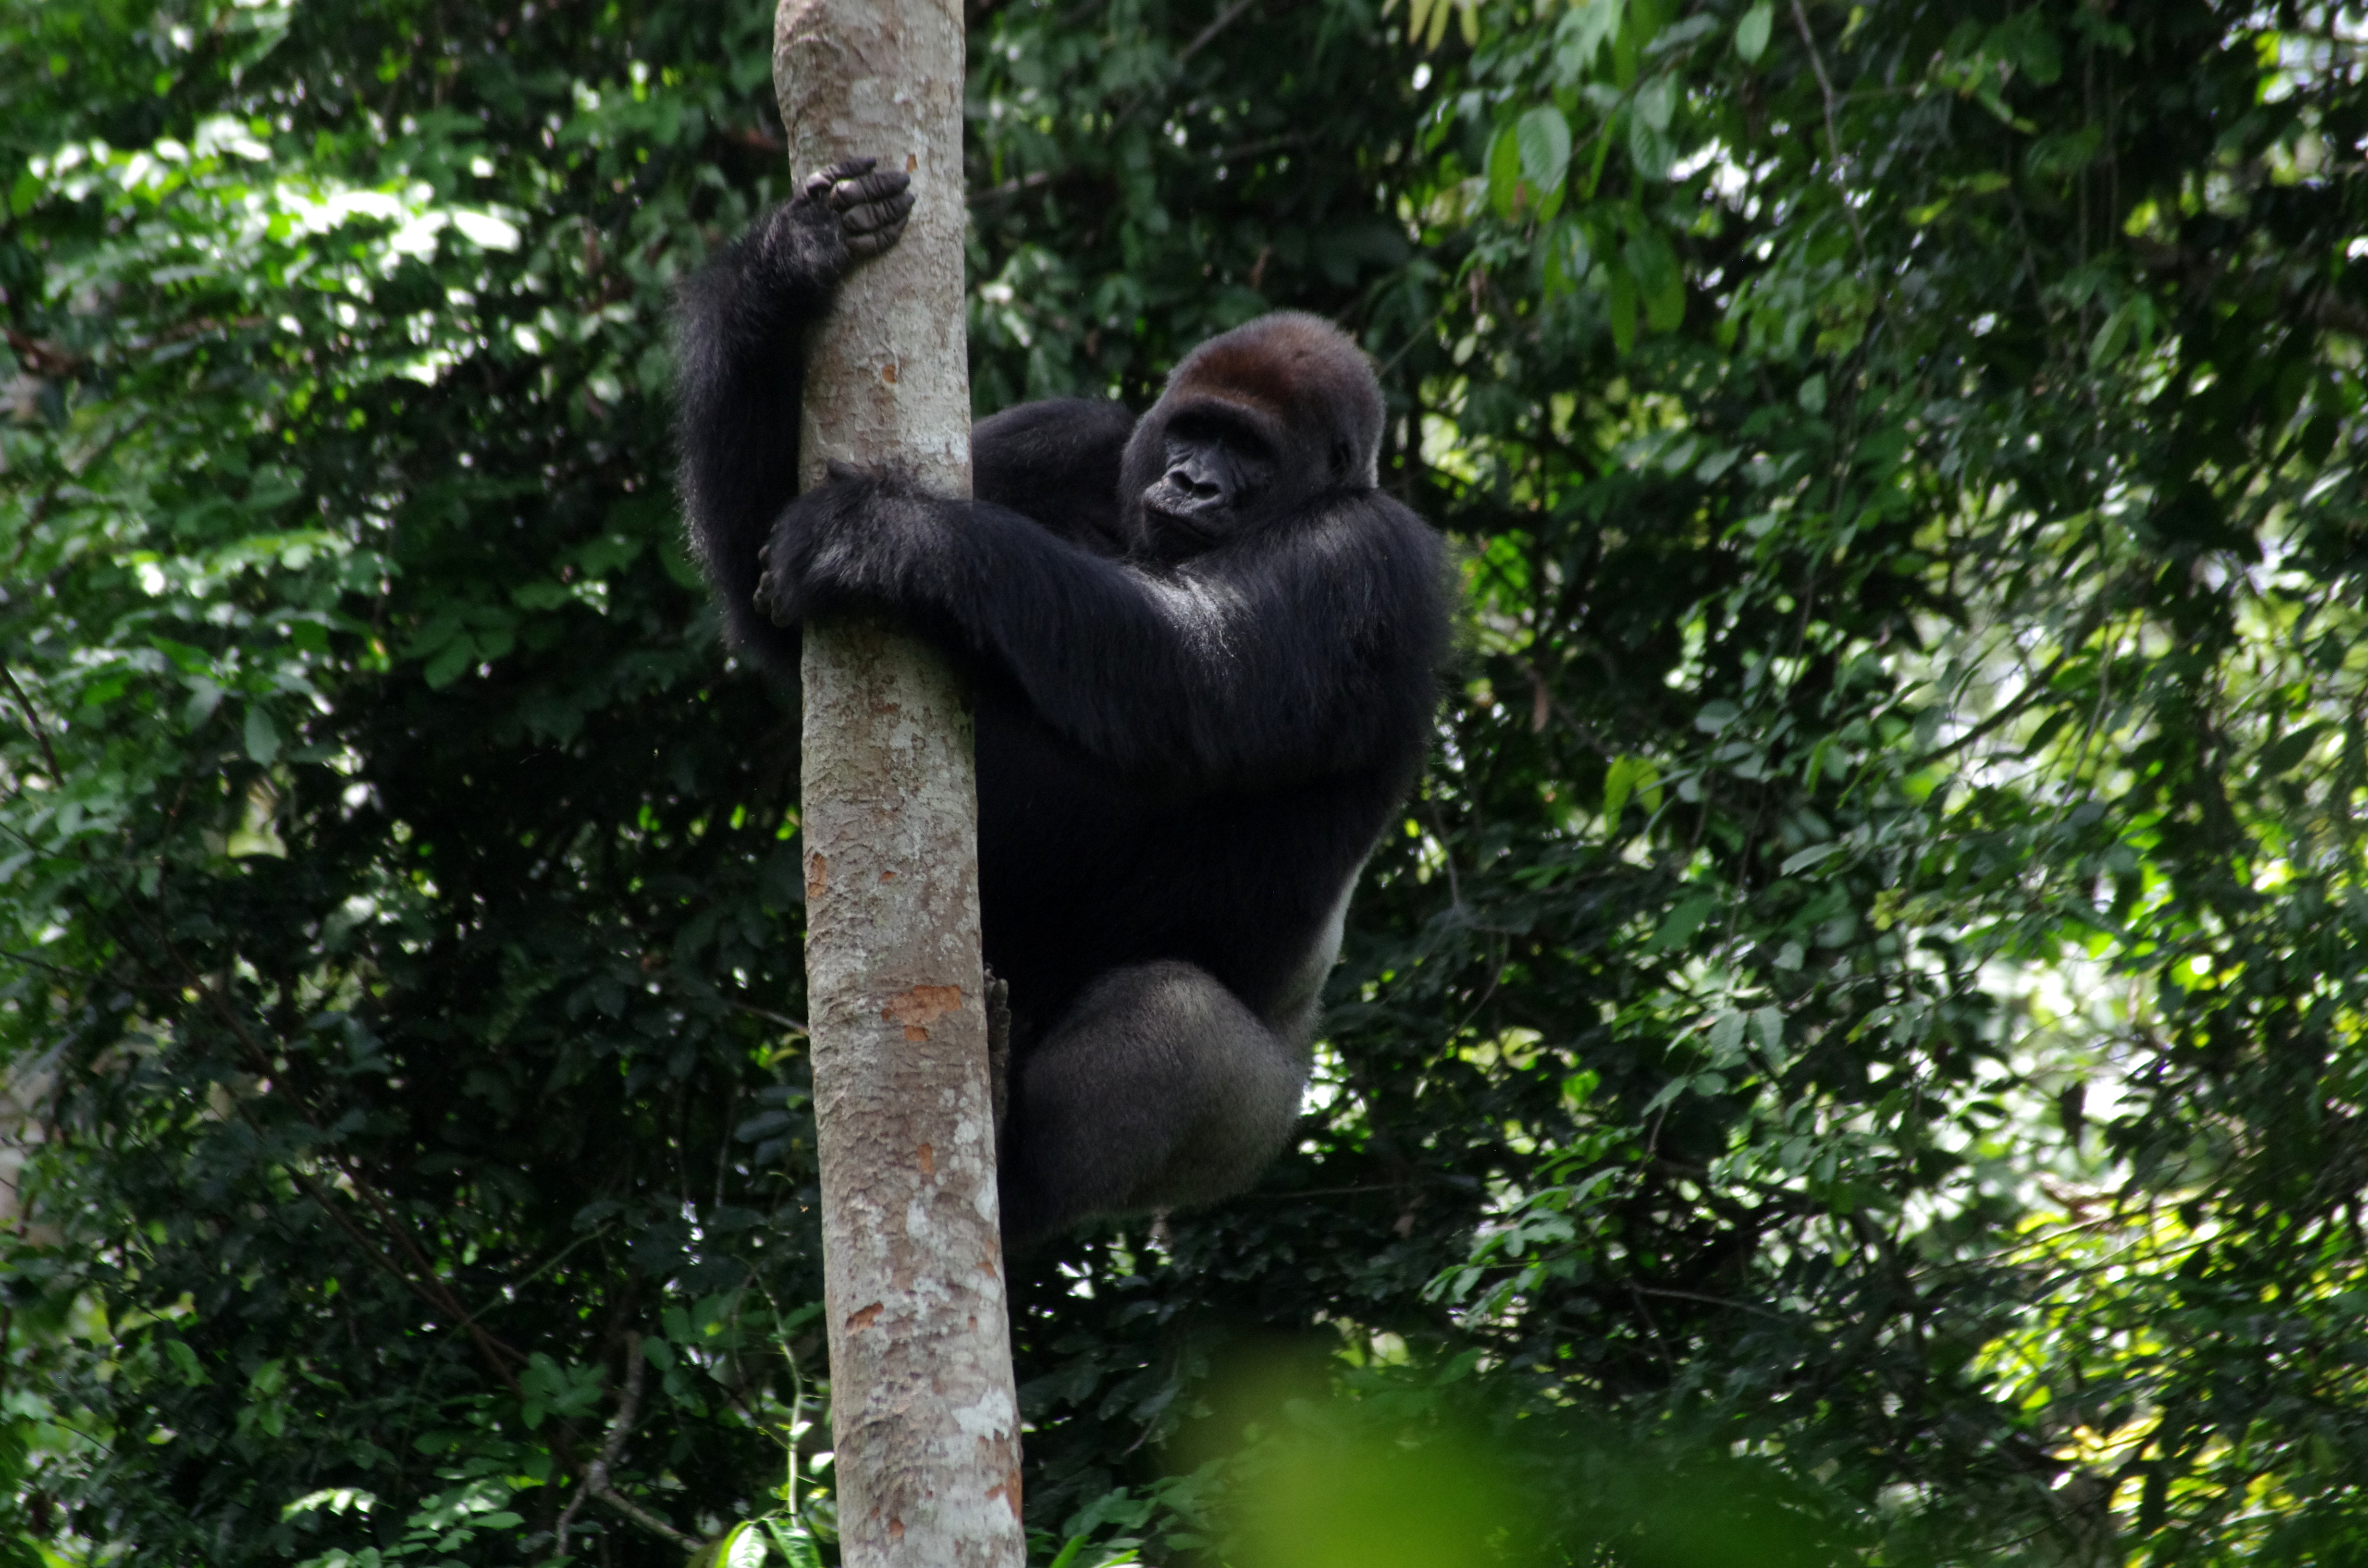 photo of a gorilla